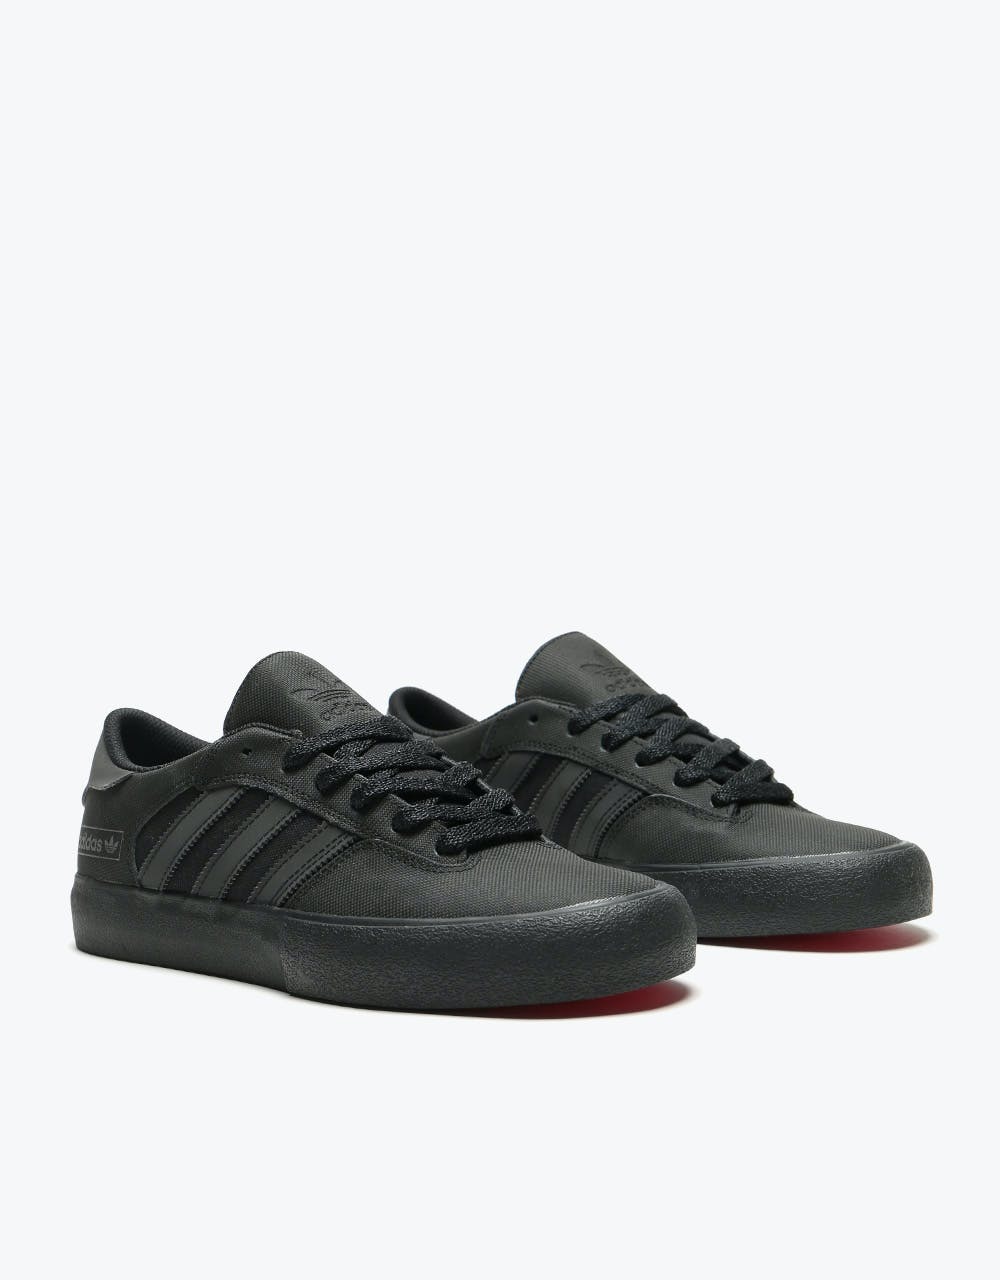 Adidas Matchbreak Super Skate Shoes - Core Black/Core Black/Core Black